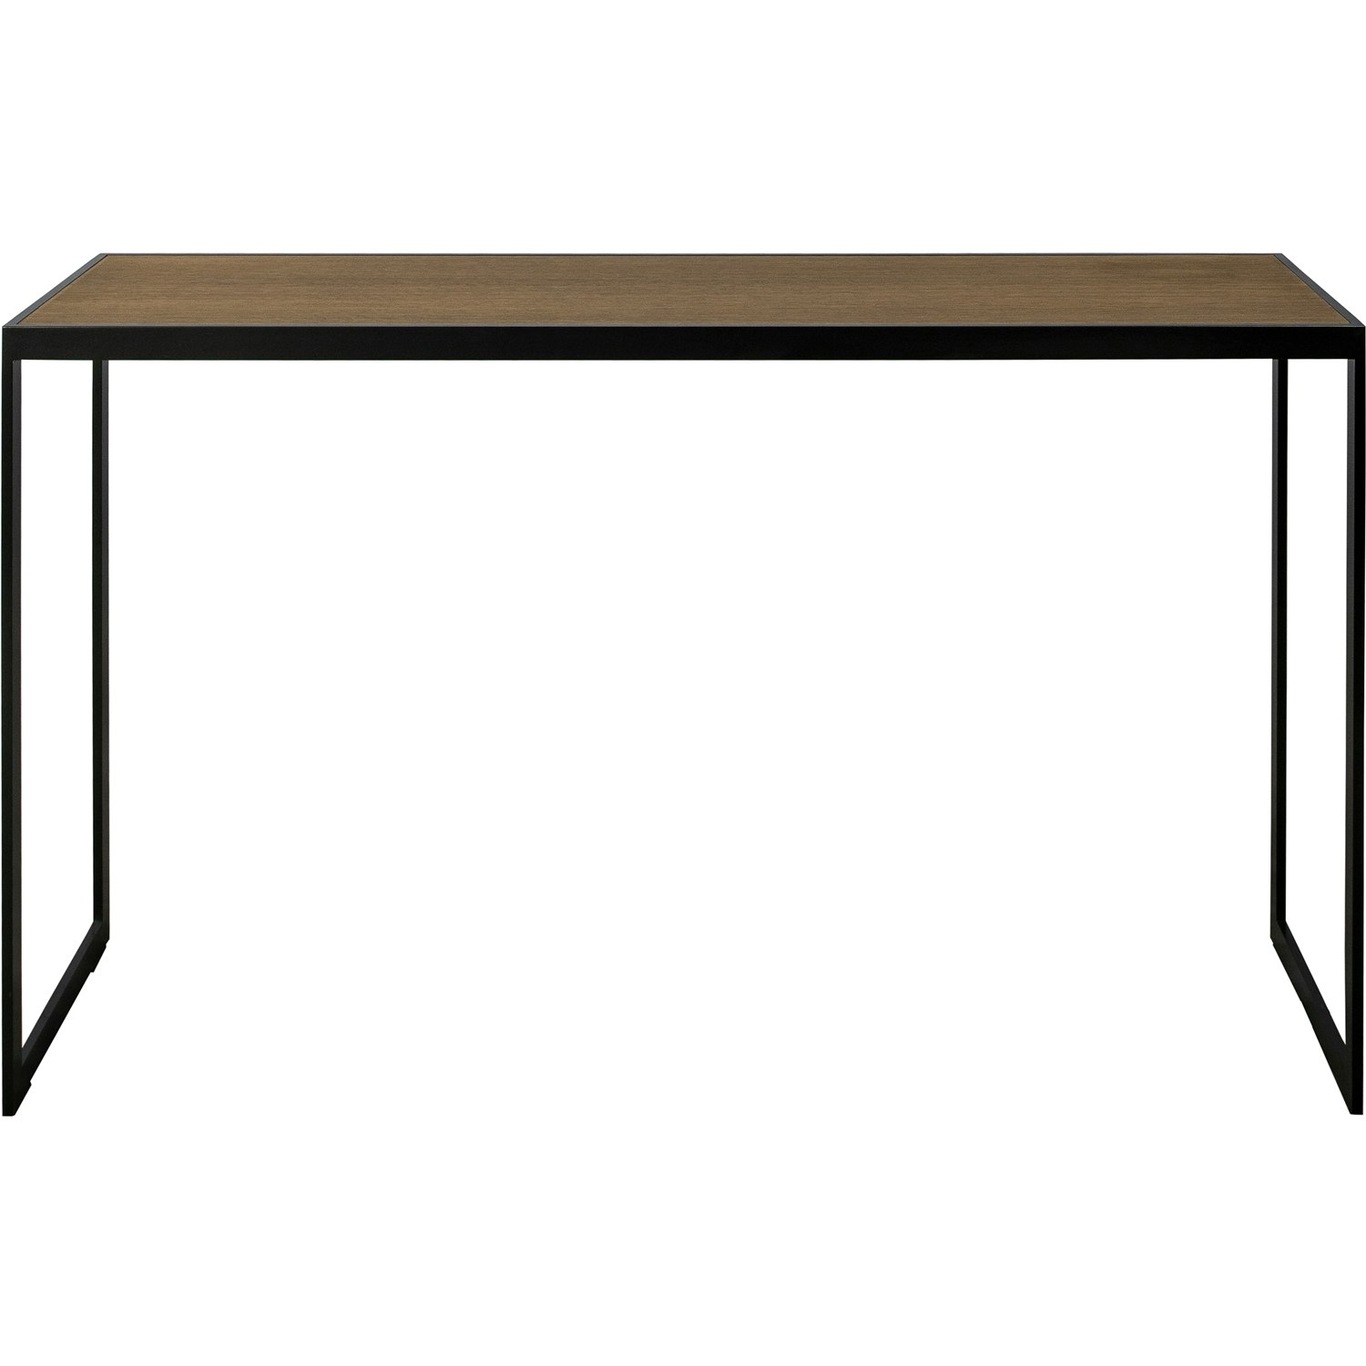 Square Console Table 122x36x70 cm, Black/Burned Walnut